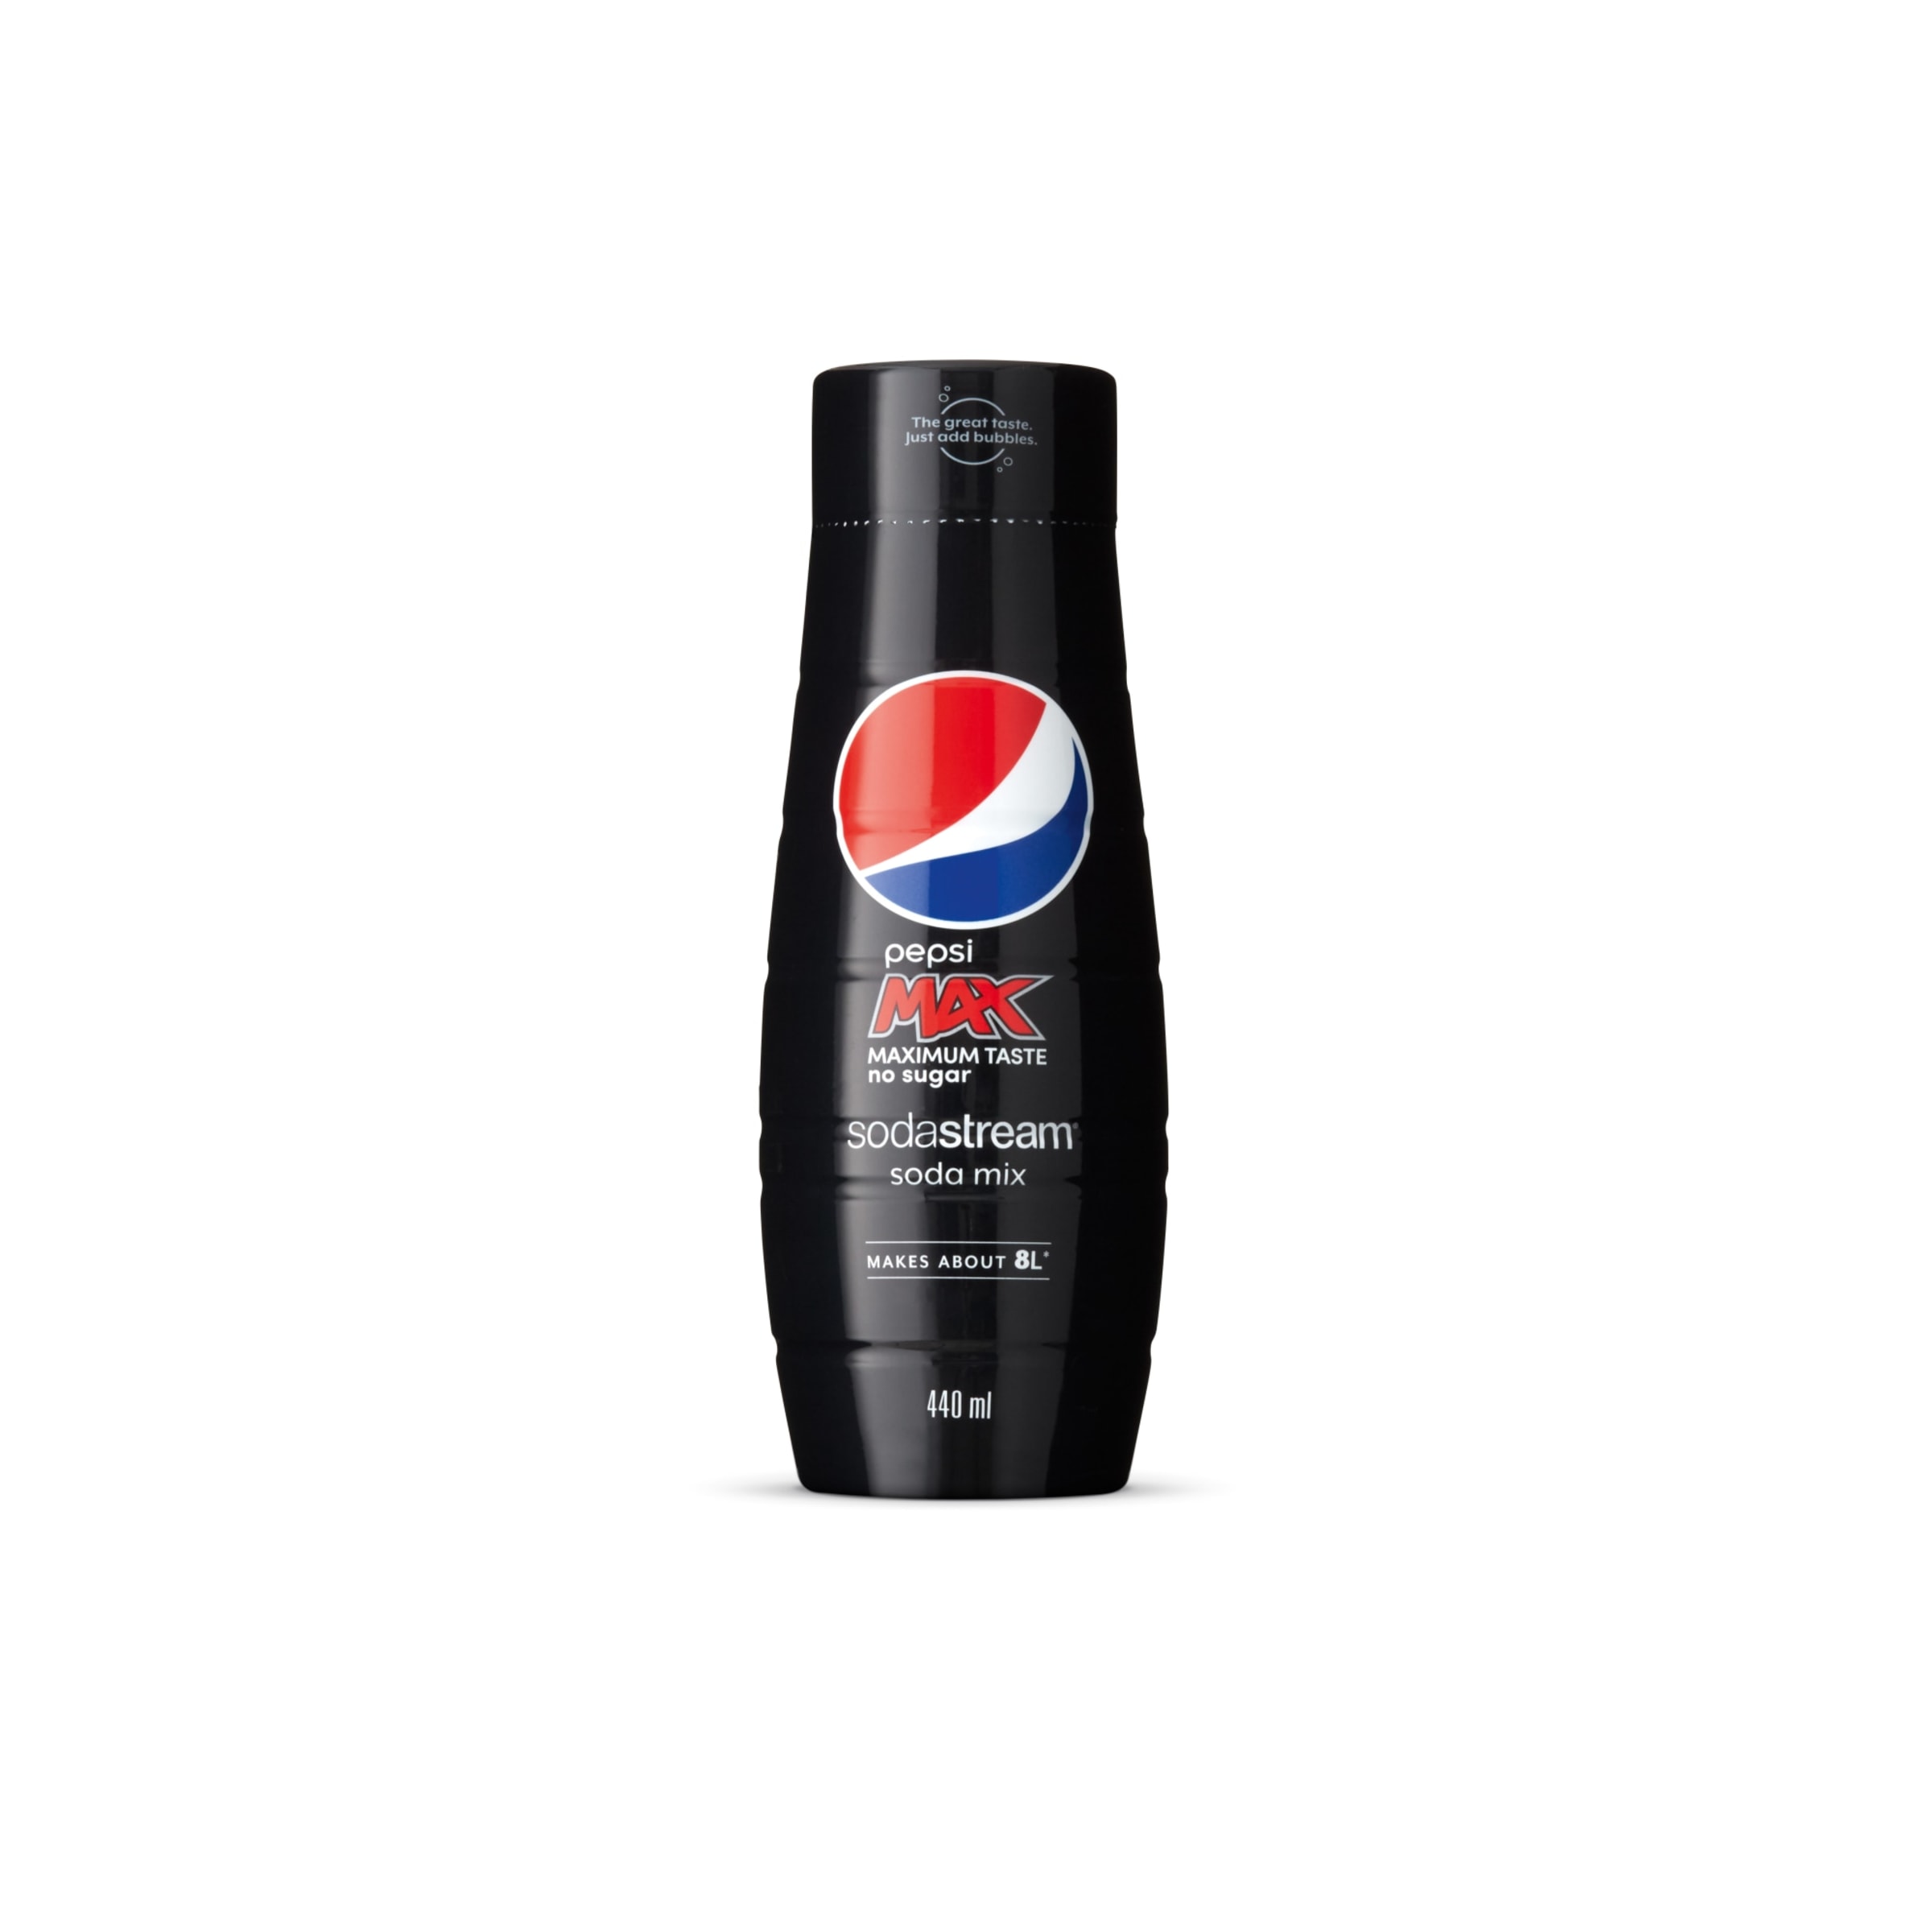 PepsiCo Pepsi max sodastream soda mix Reviews